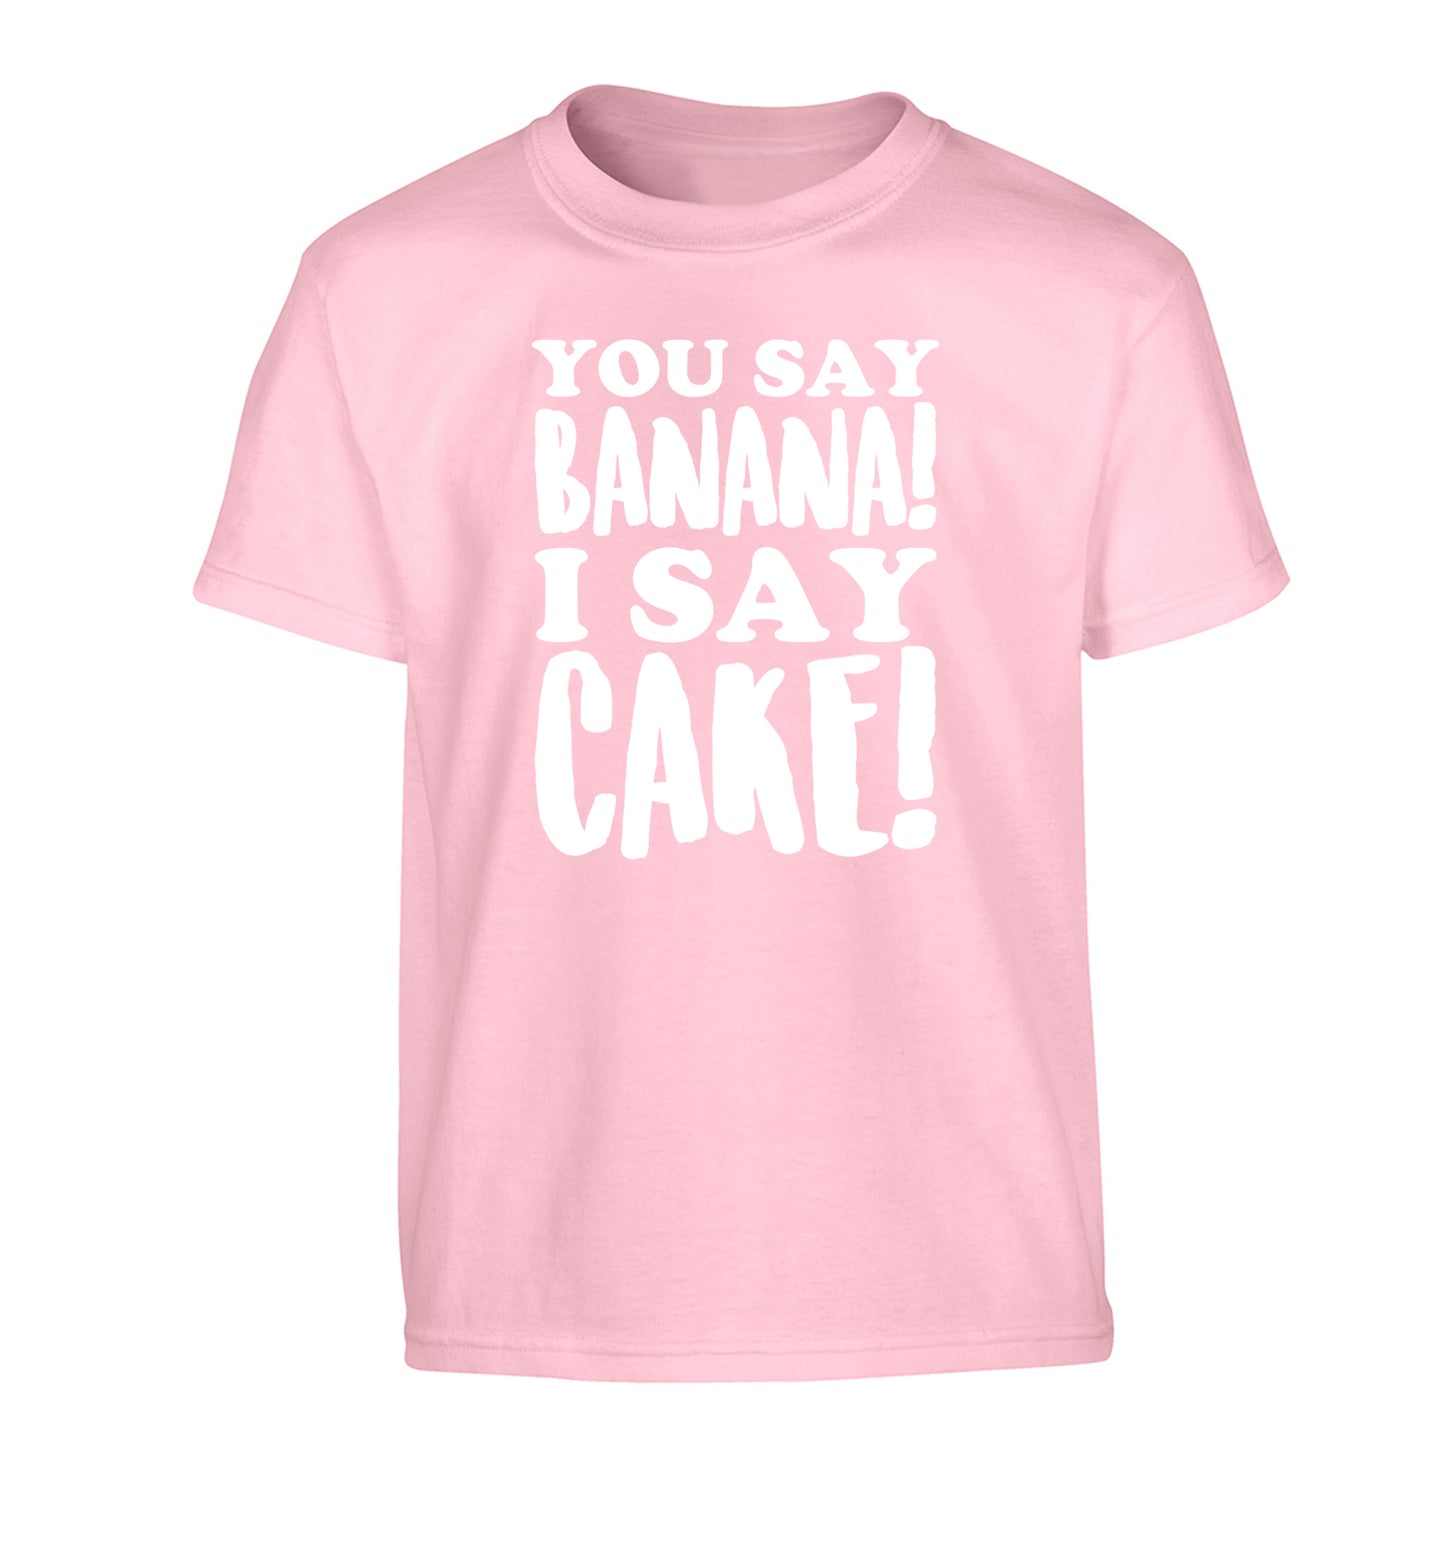 You say banana I say cake! Children's light pink Tshirt 12-14 Years